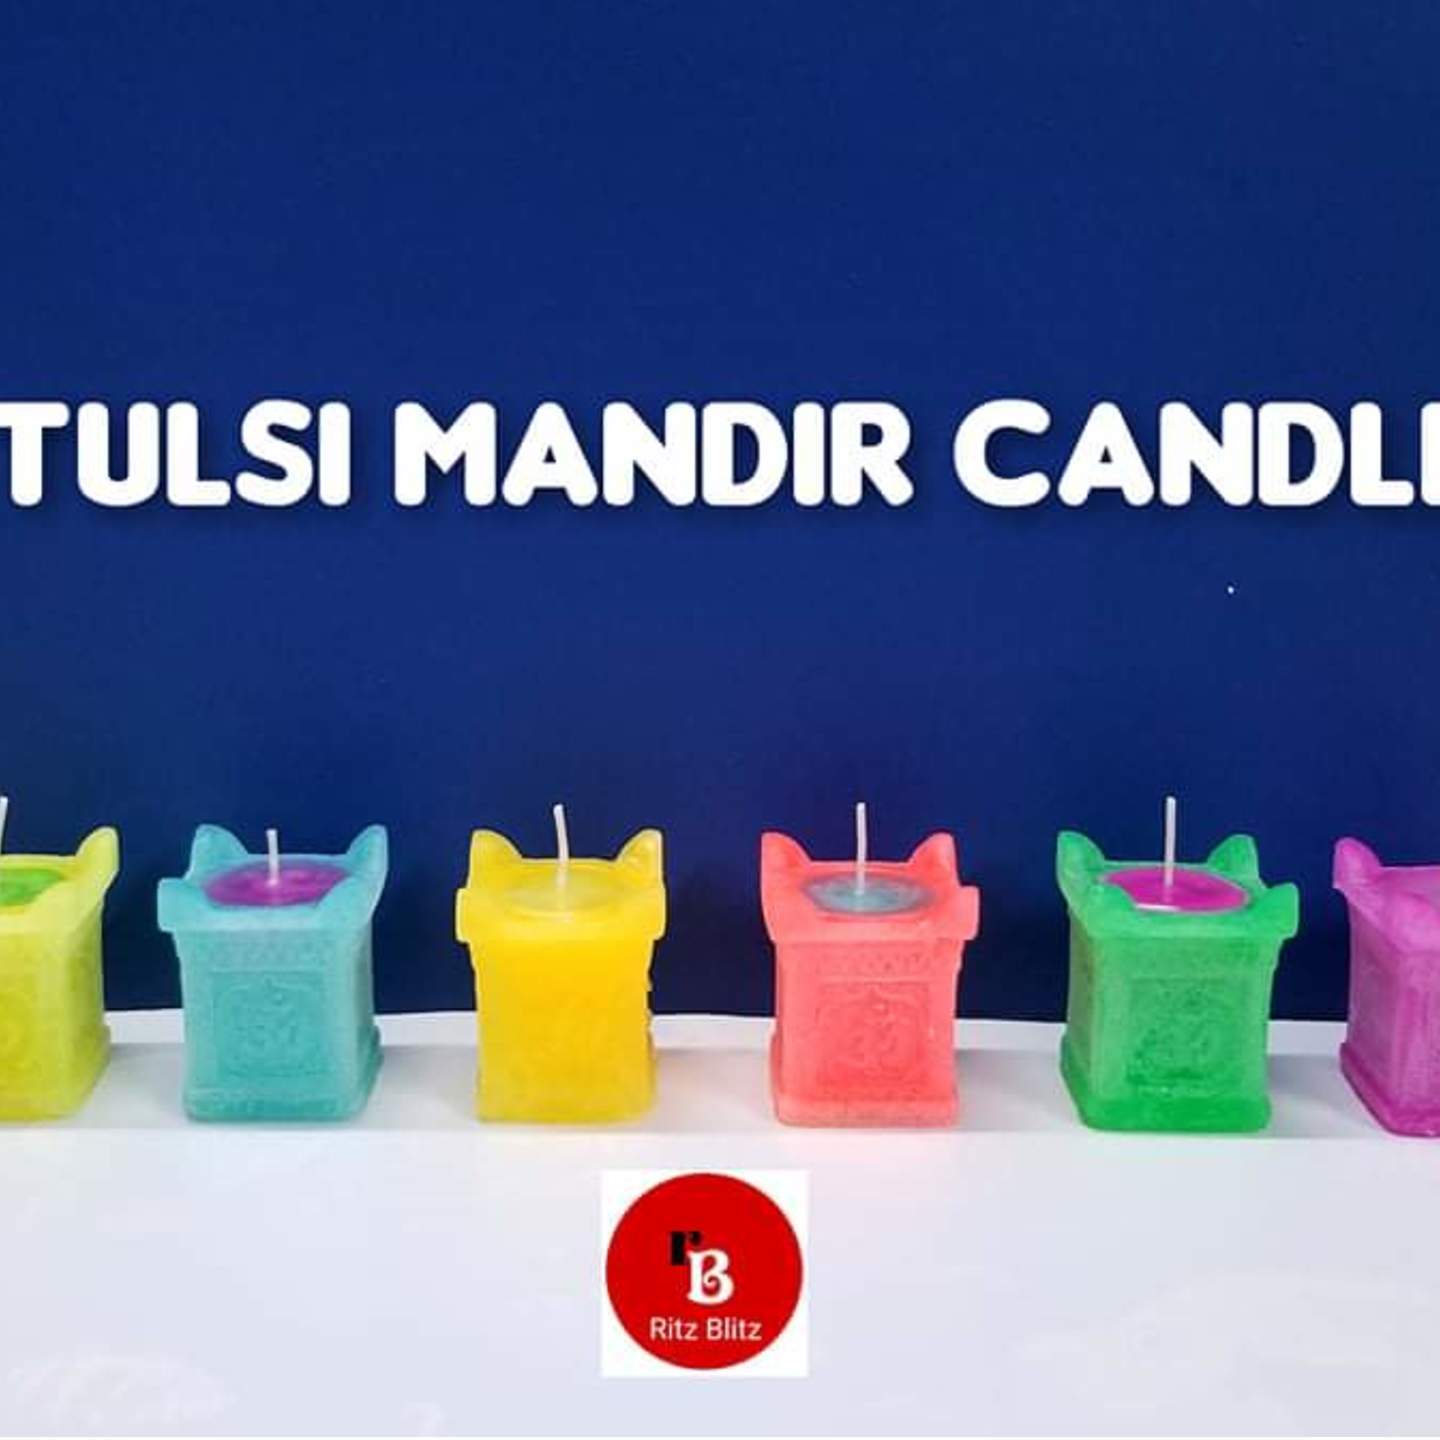 Tulsi Mandir Candle